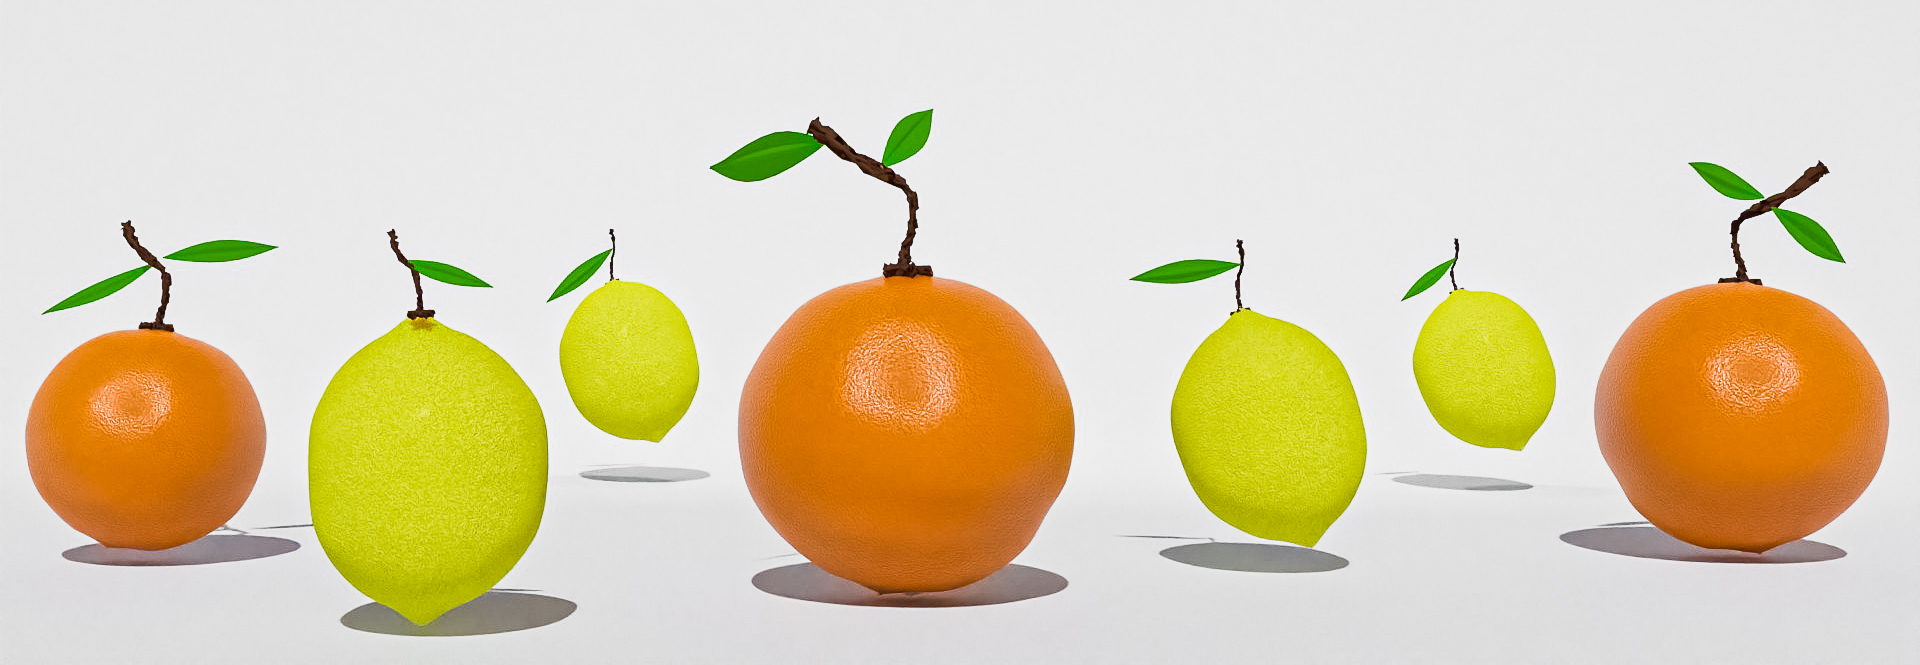 Vitamin analysis. 3D render of oranges and lemons